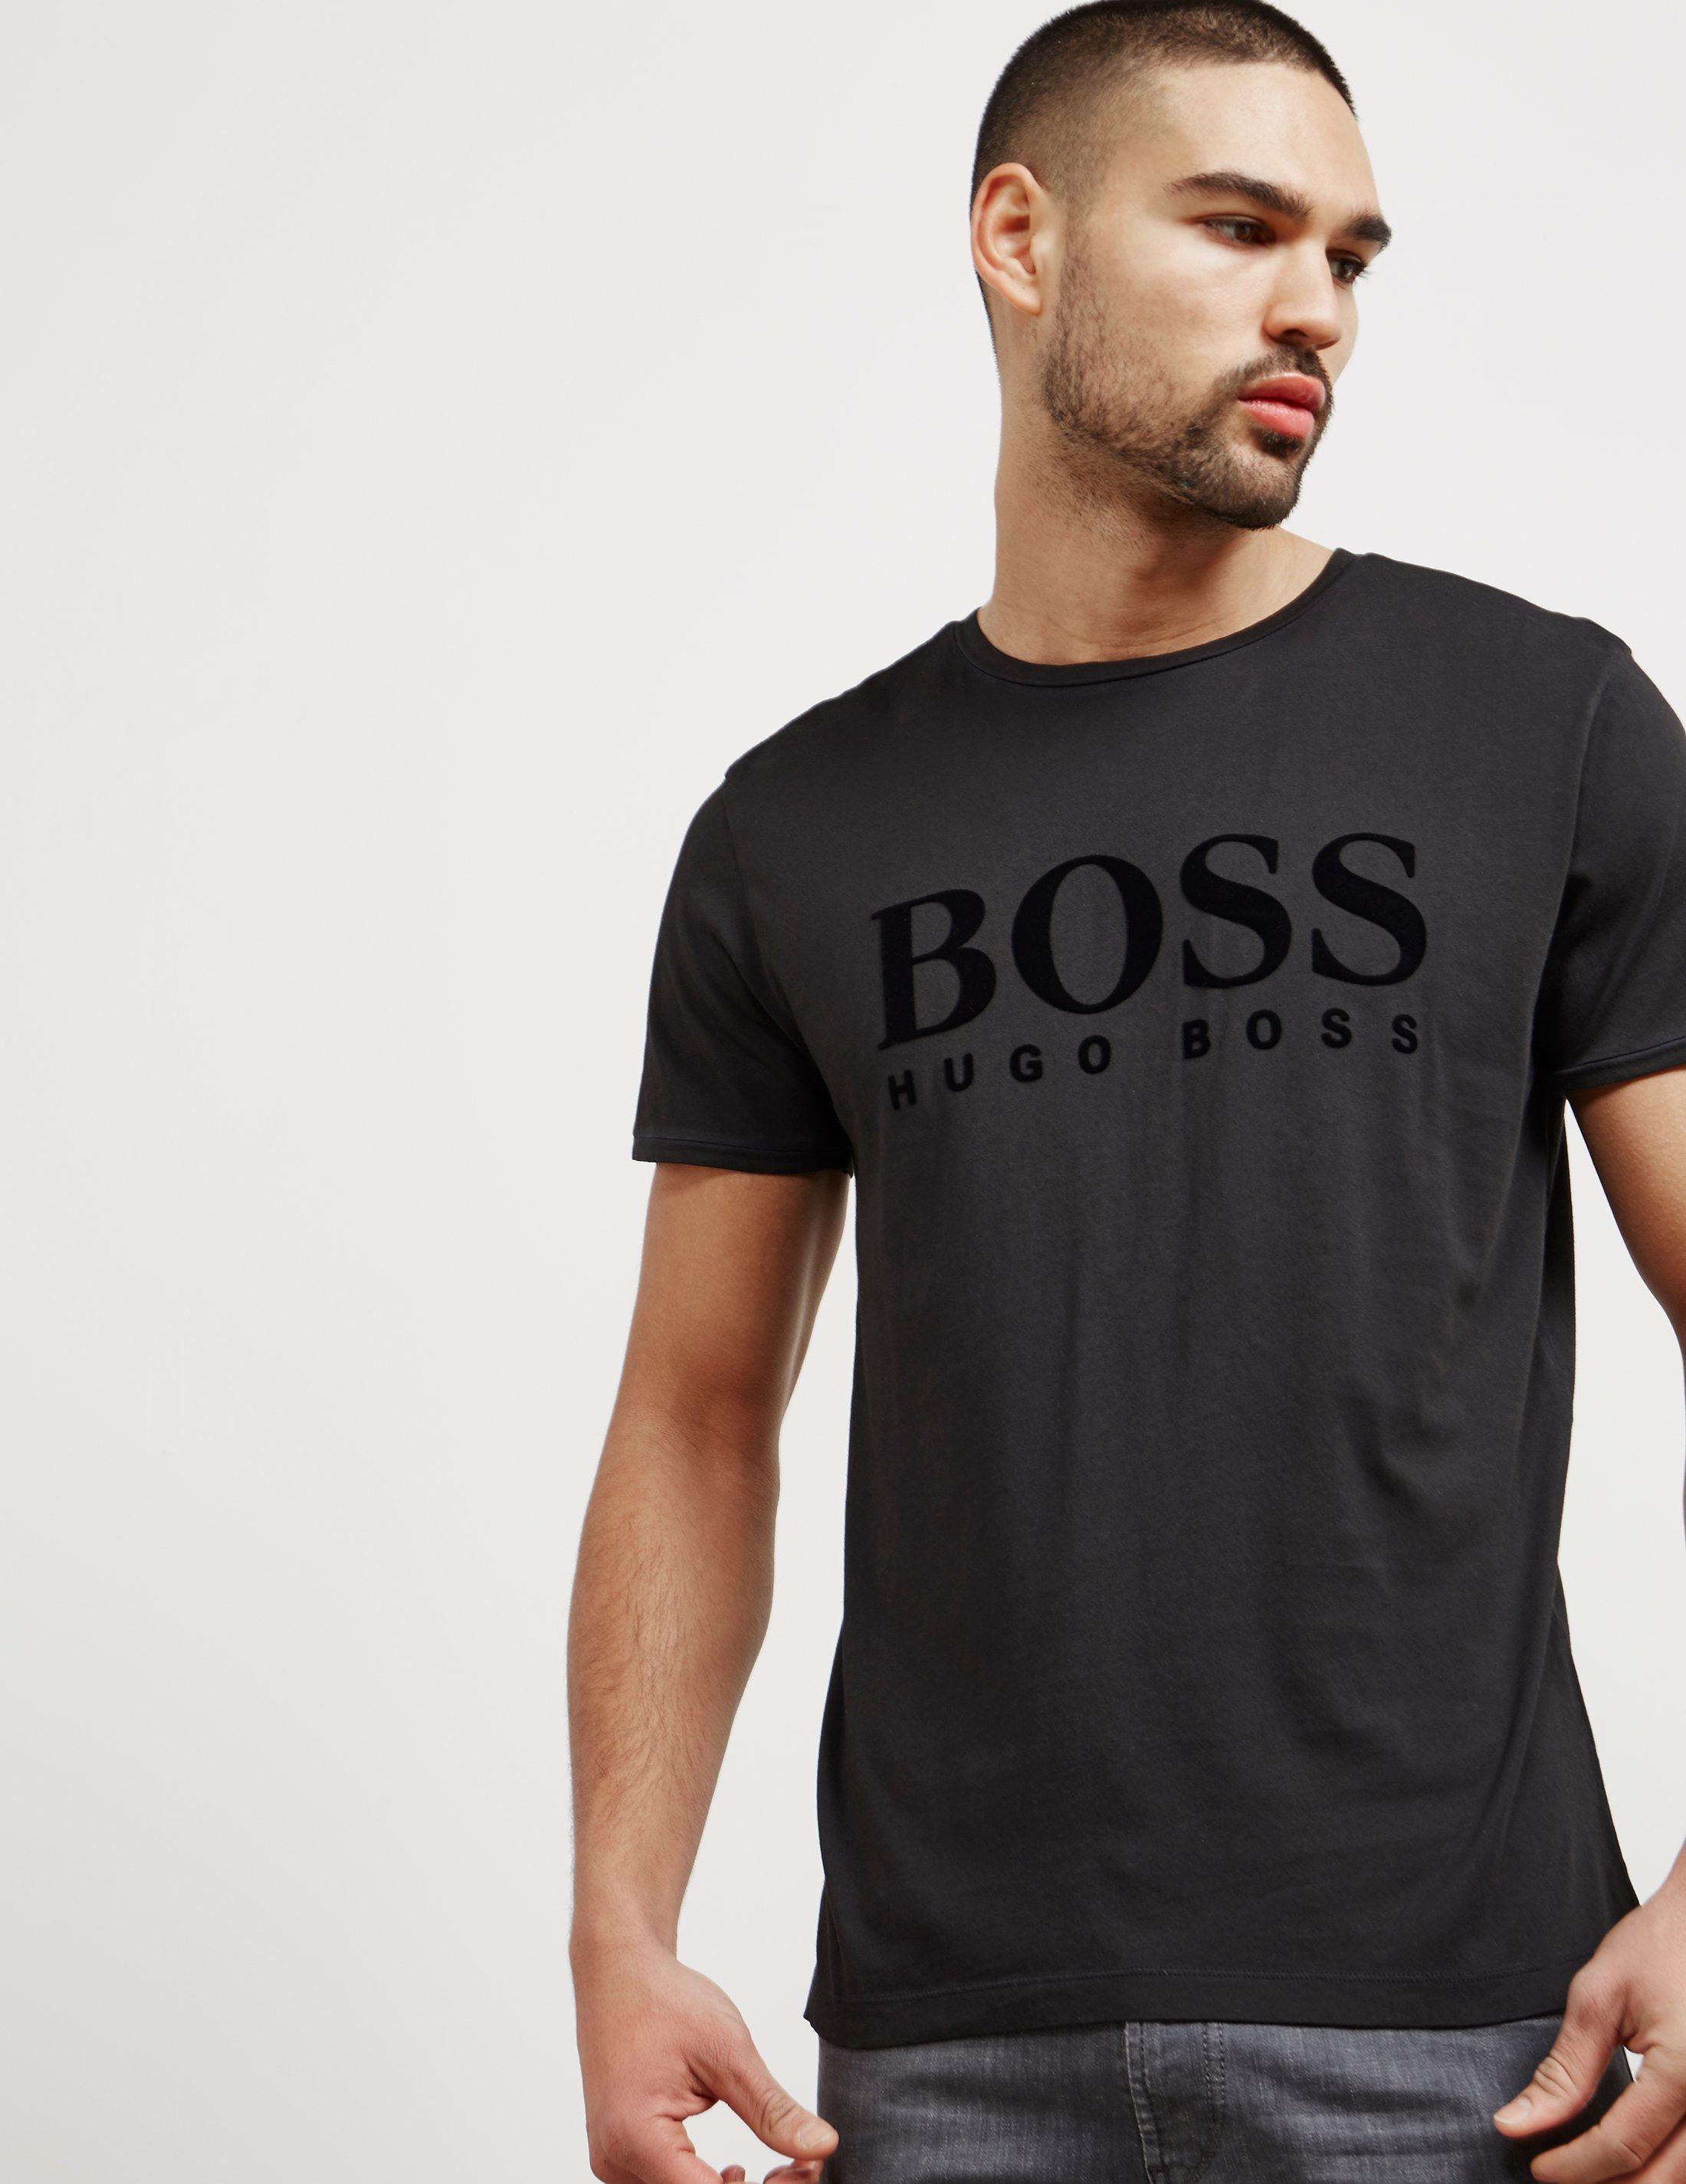 mens cheap hugo boss t shirts